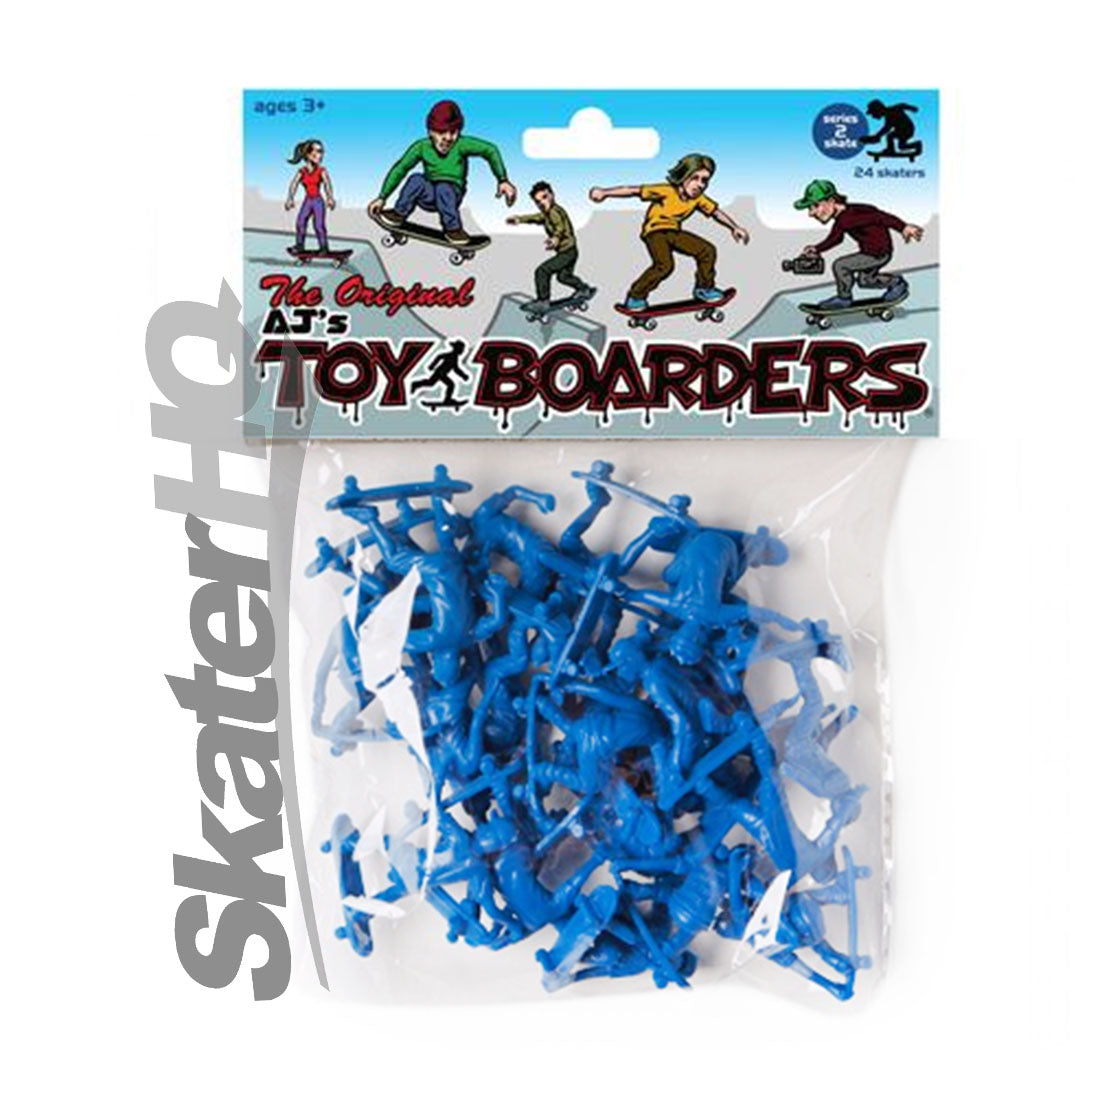 AJs Toy Boarders Skate Series 2 - Blue Skateboard Accessories